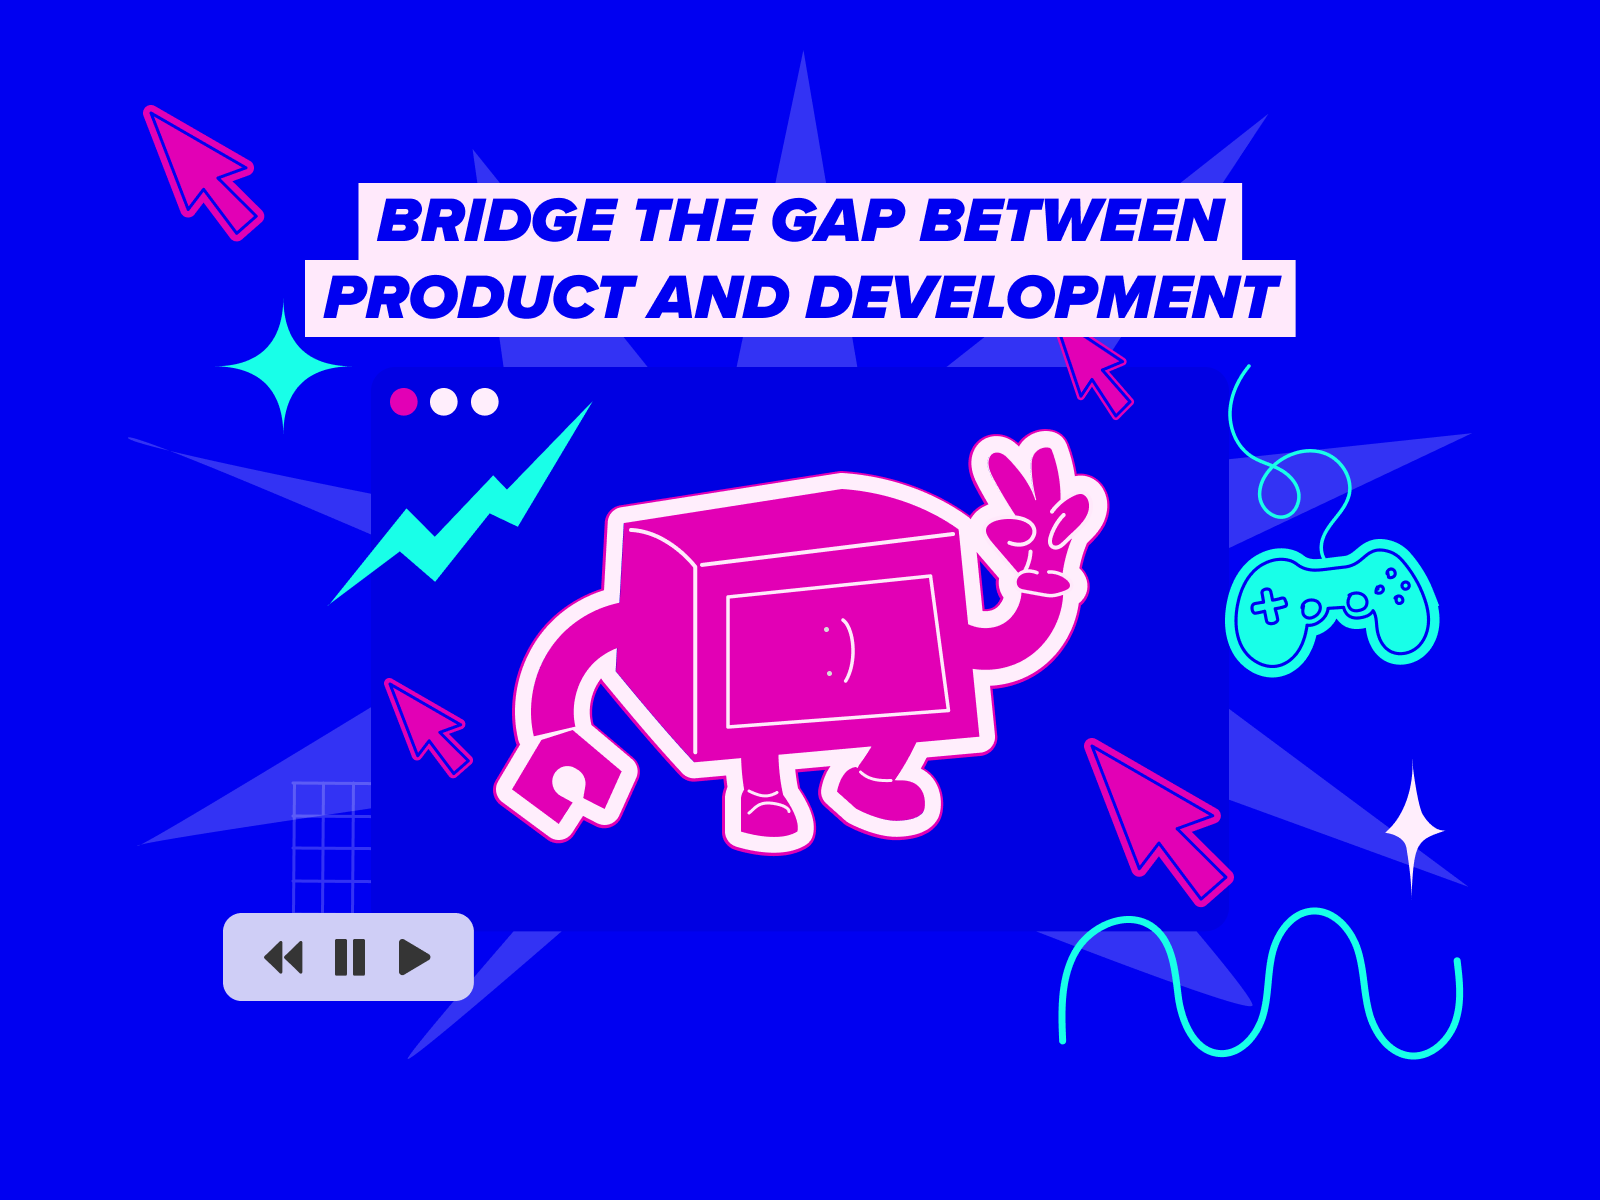 Bridge the gap between Product and Development